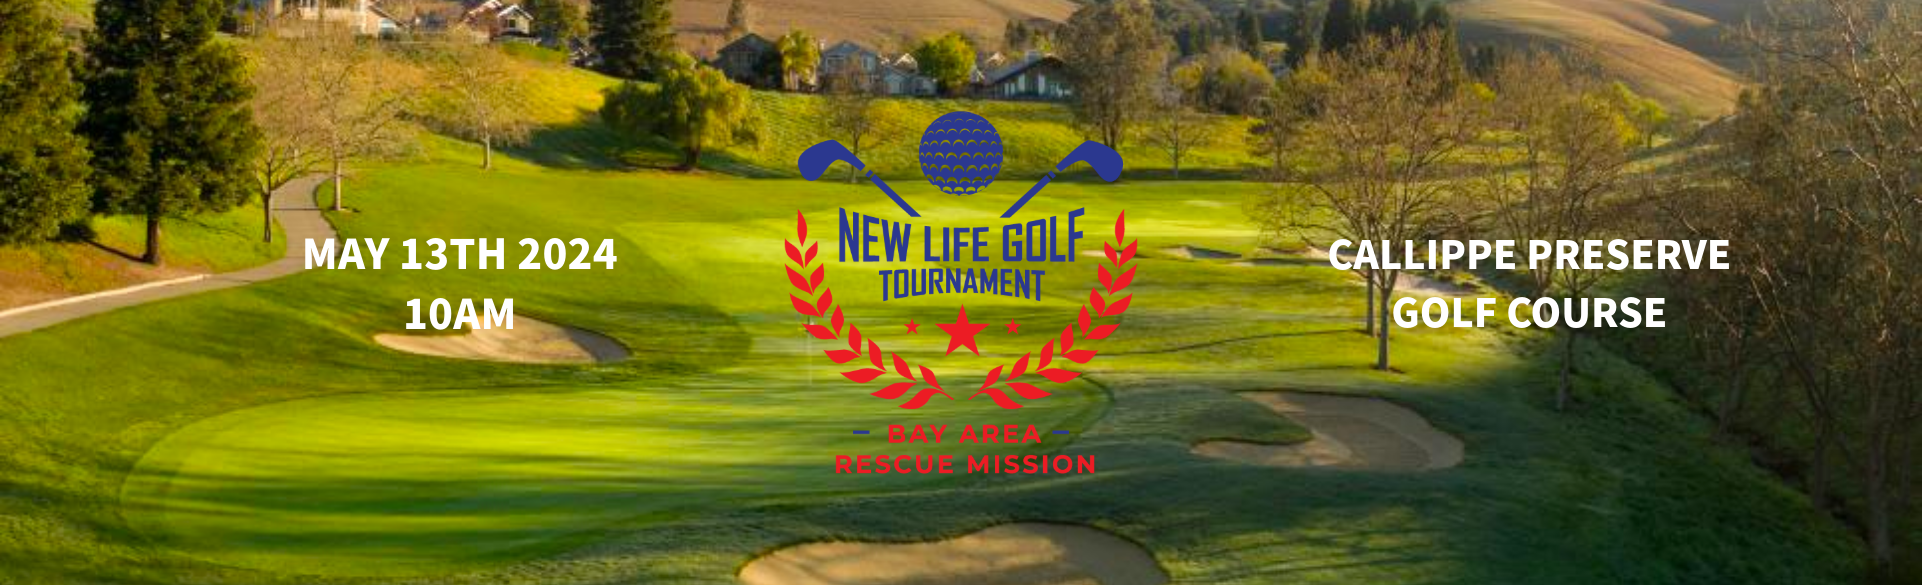 New Life Golf Tournament - Bay Area Rescue Mission